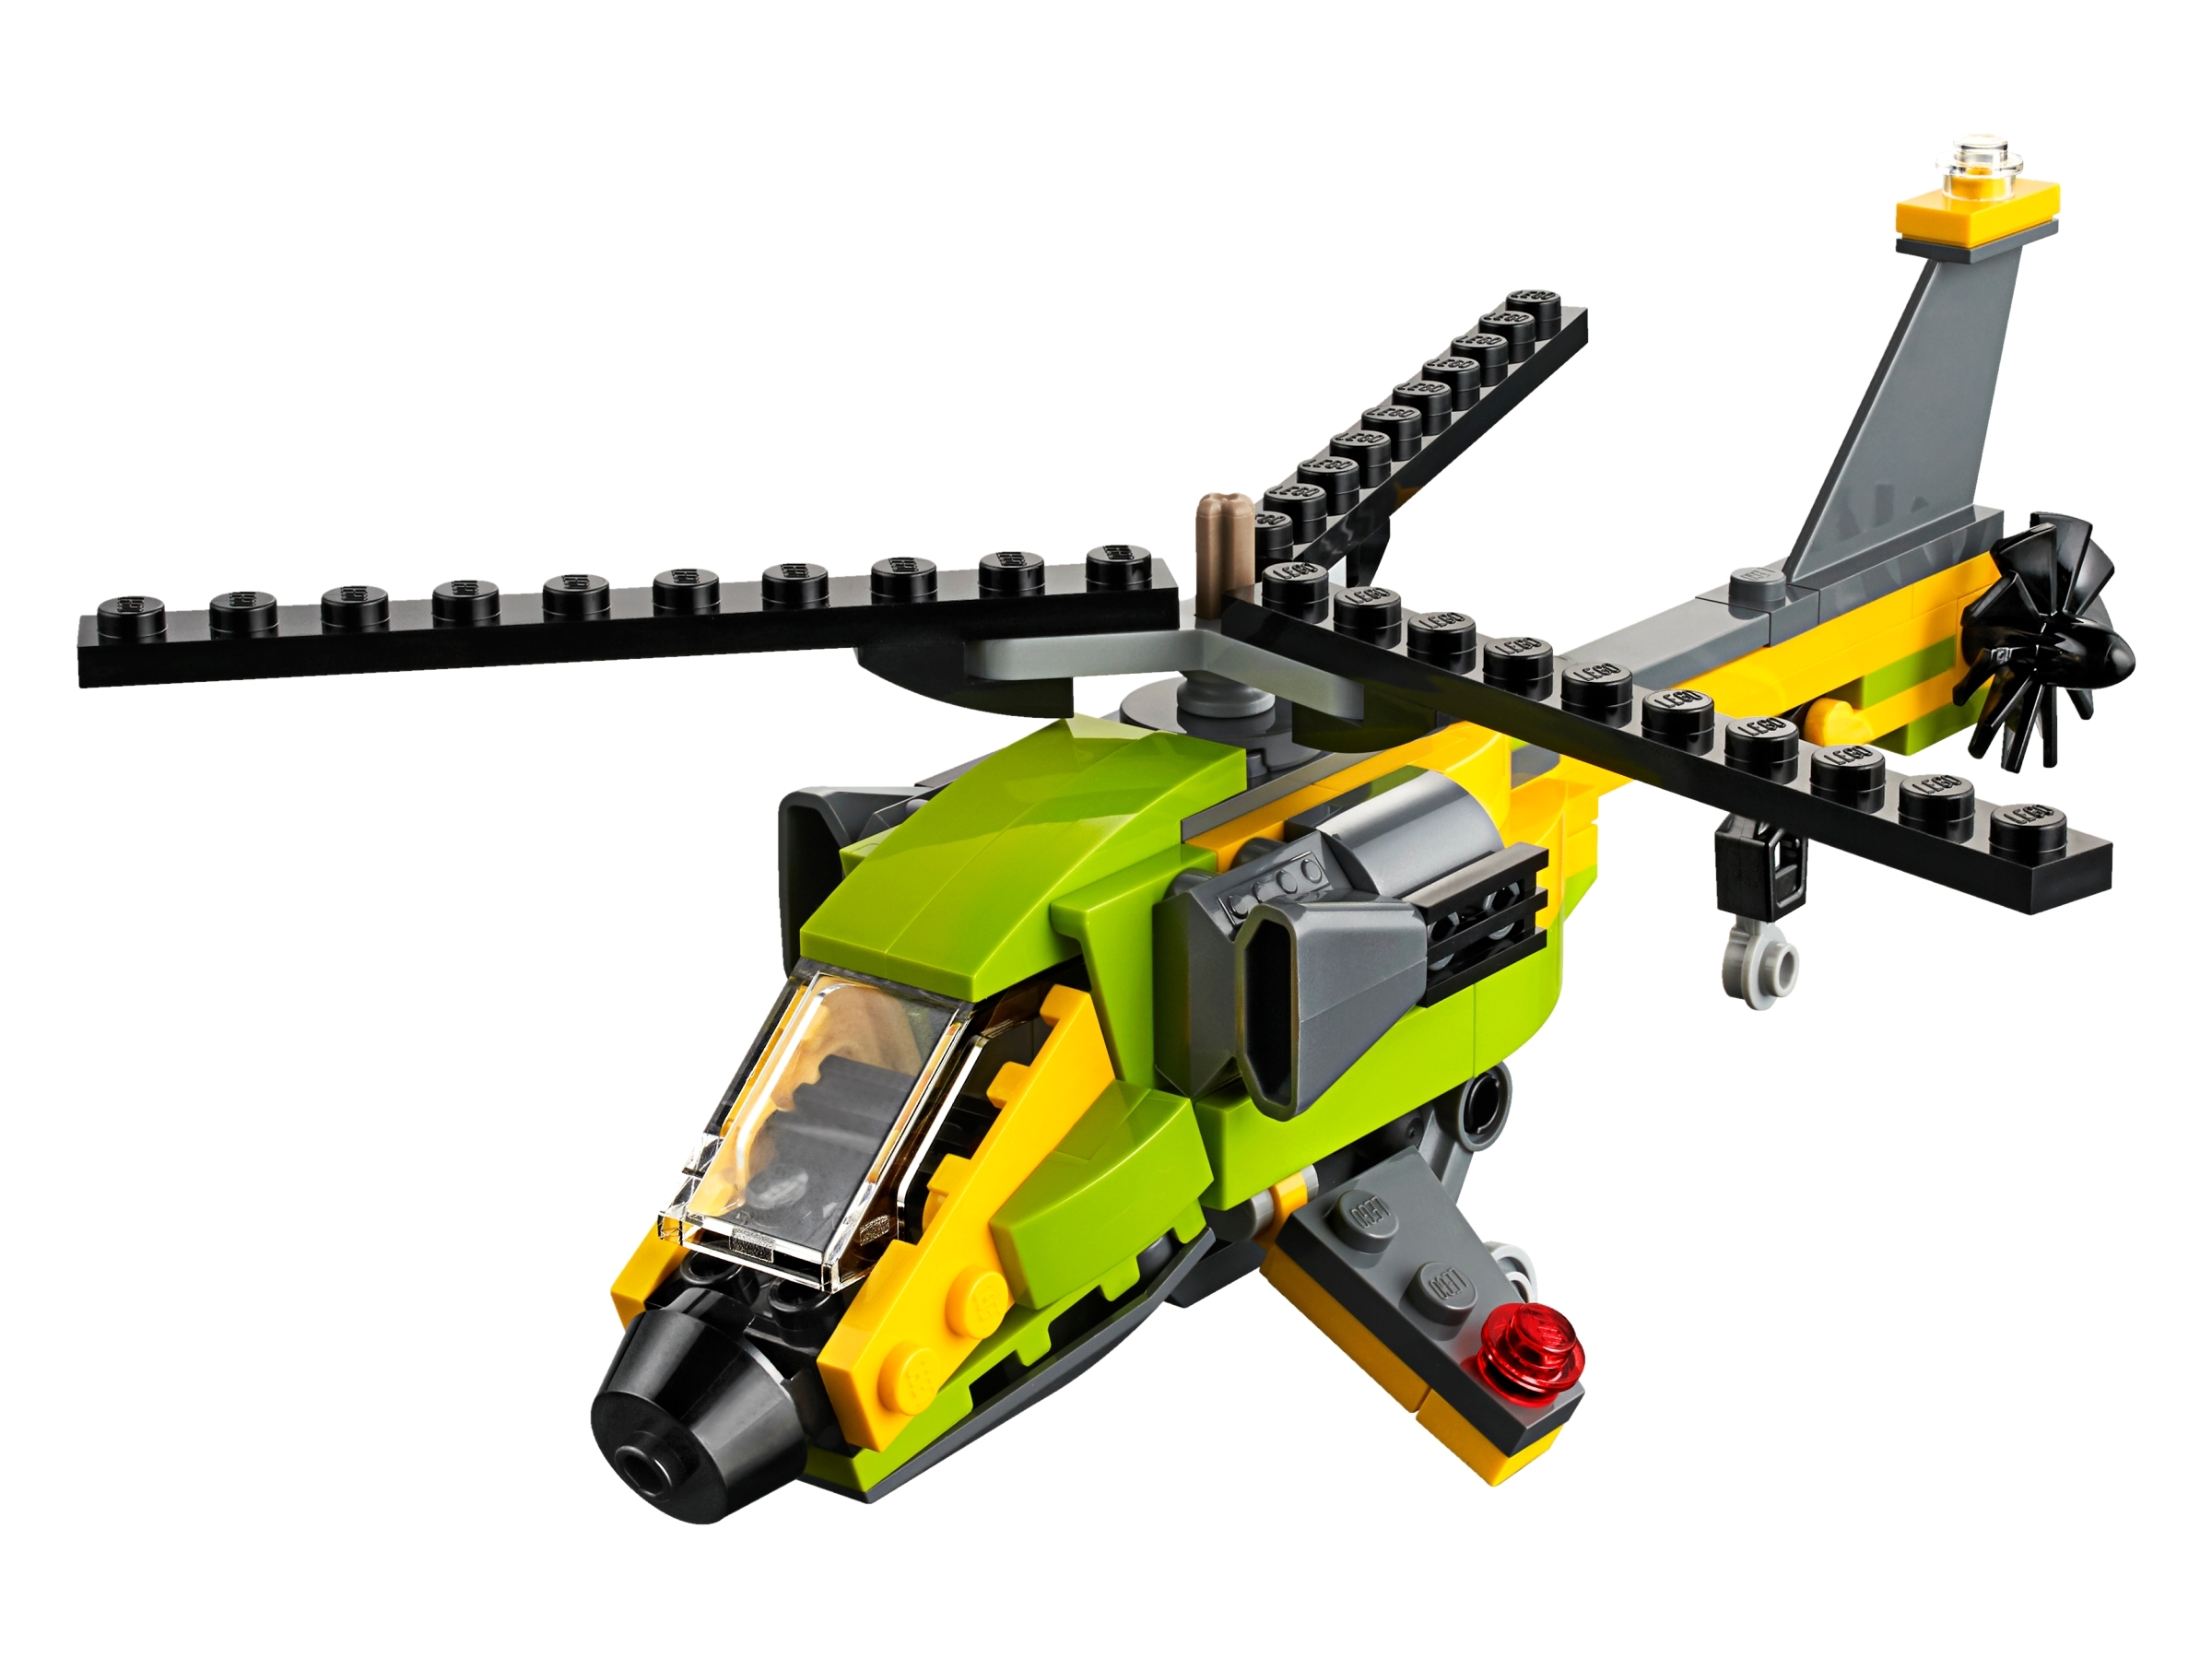 LEGO Creator 31092 Helicopter Adventure